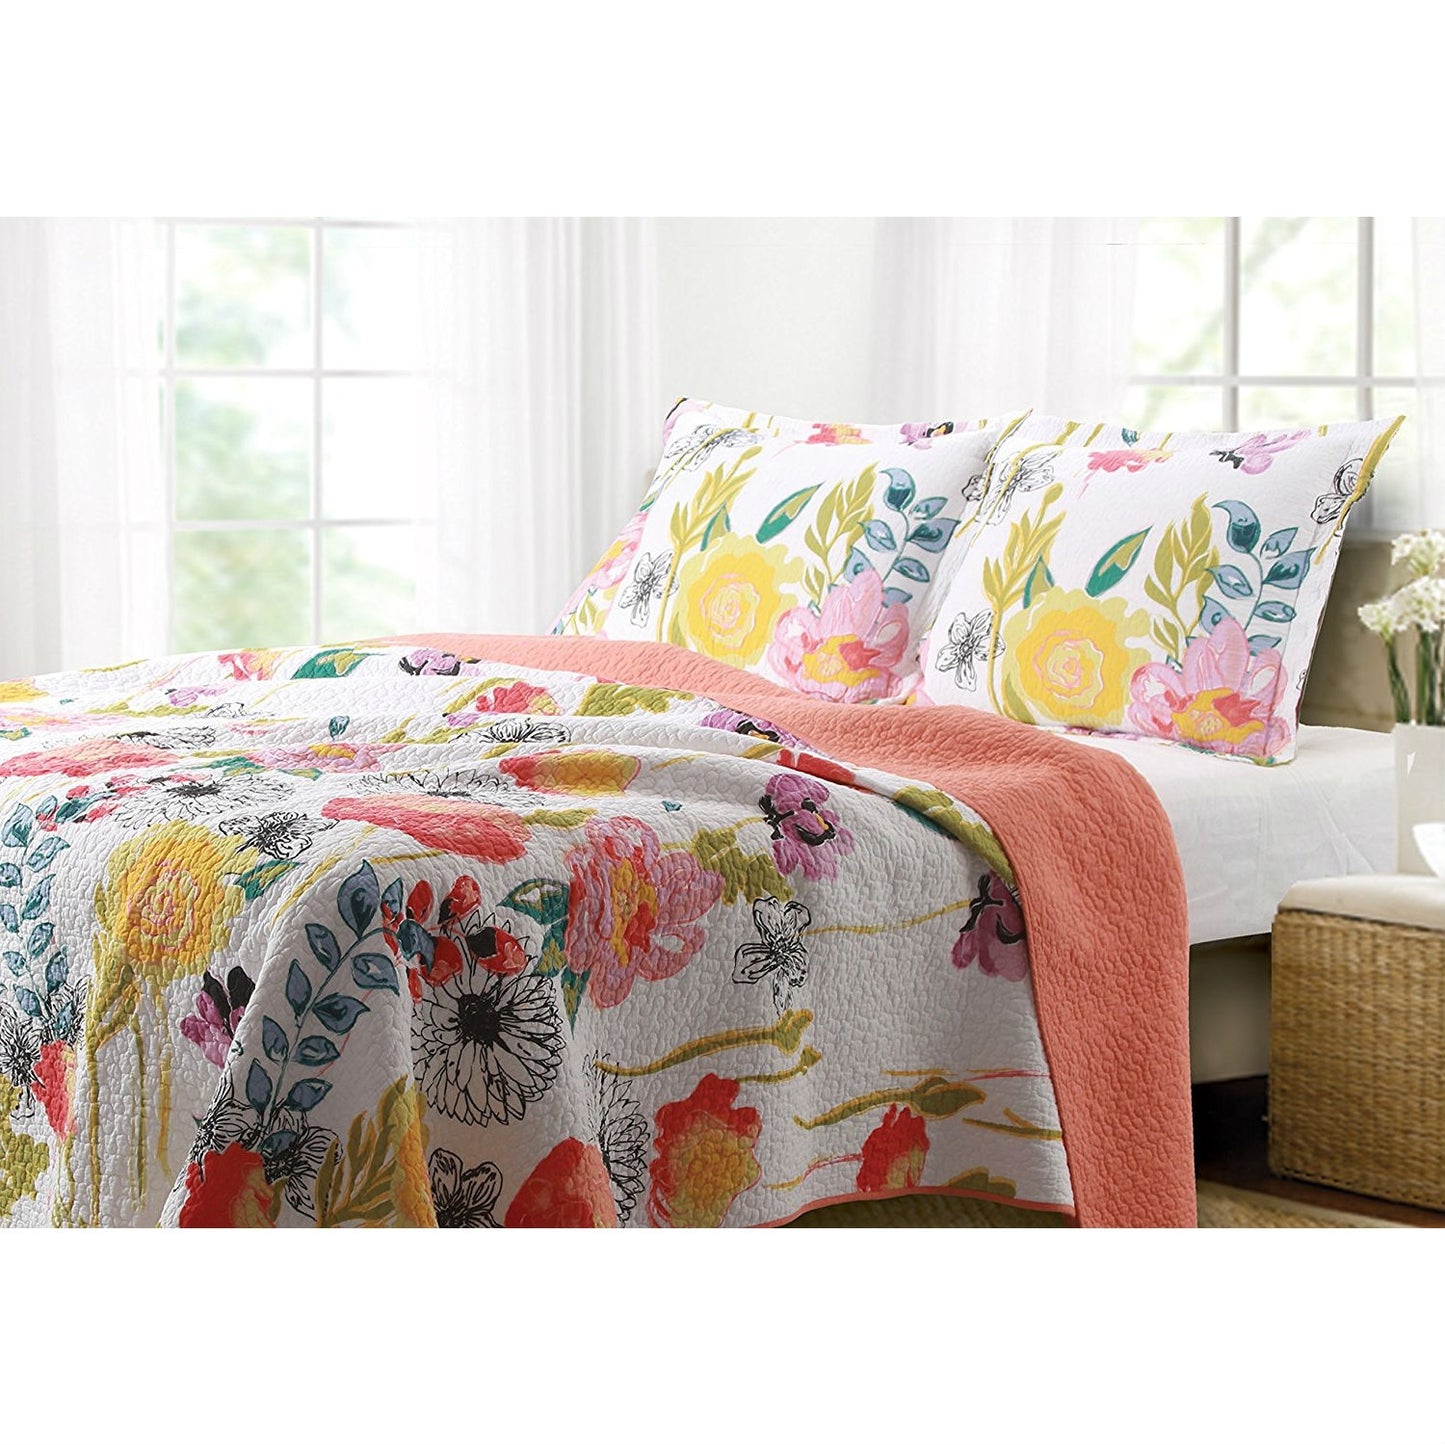 King size 3-Piece Cotton Quilt Set with Multi-Color Floral Pattern